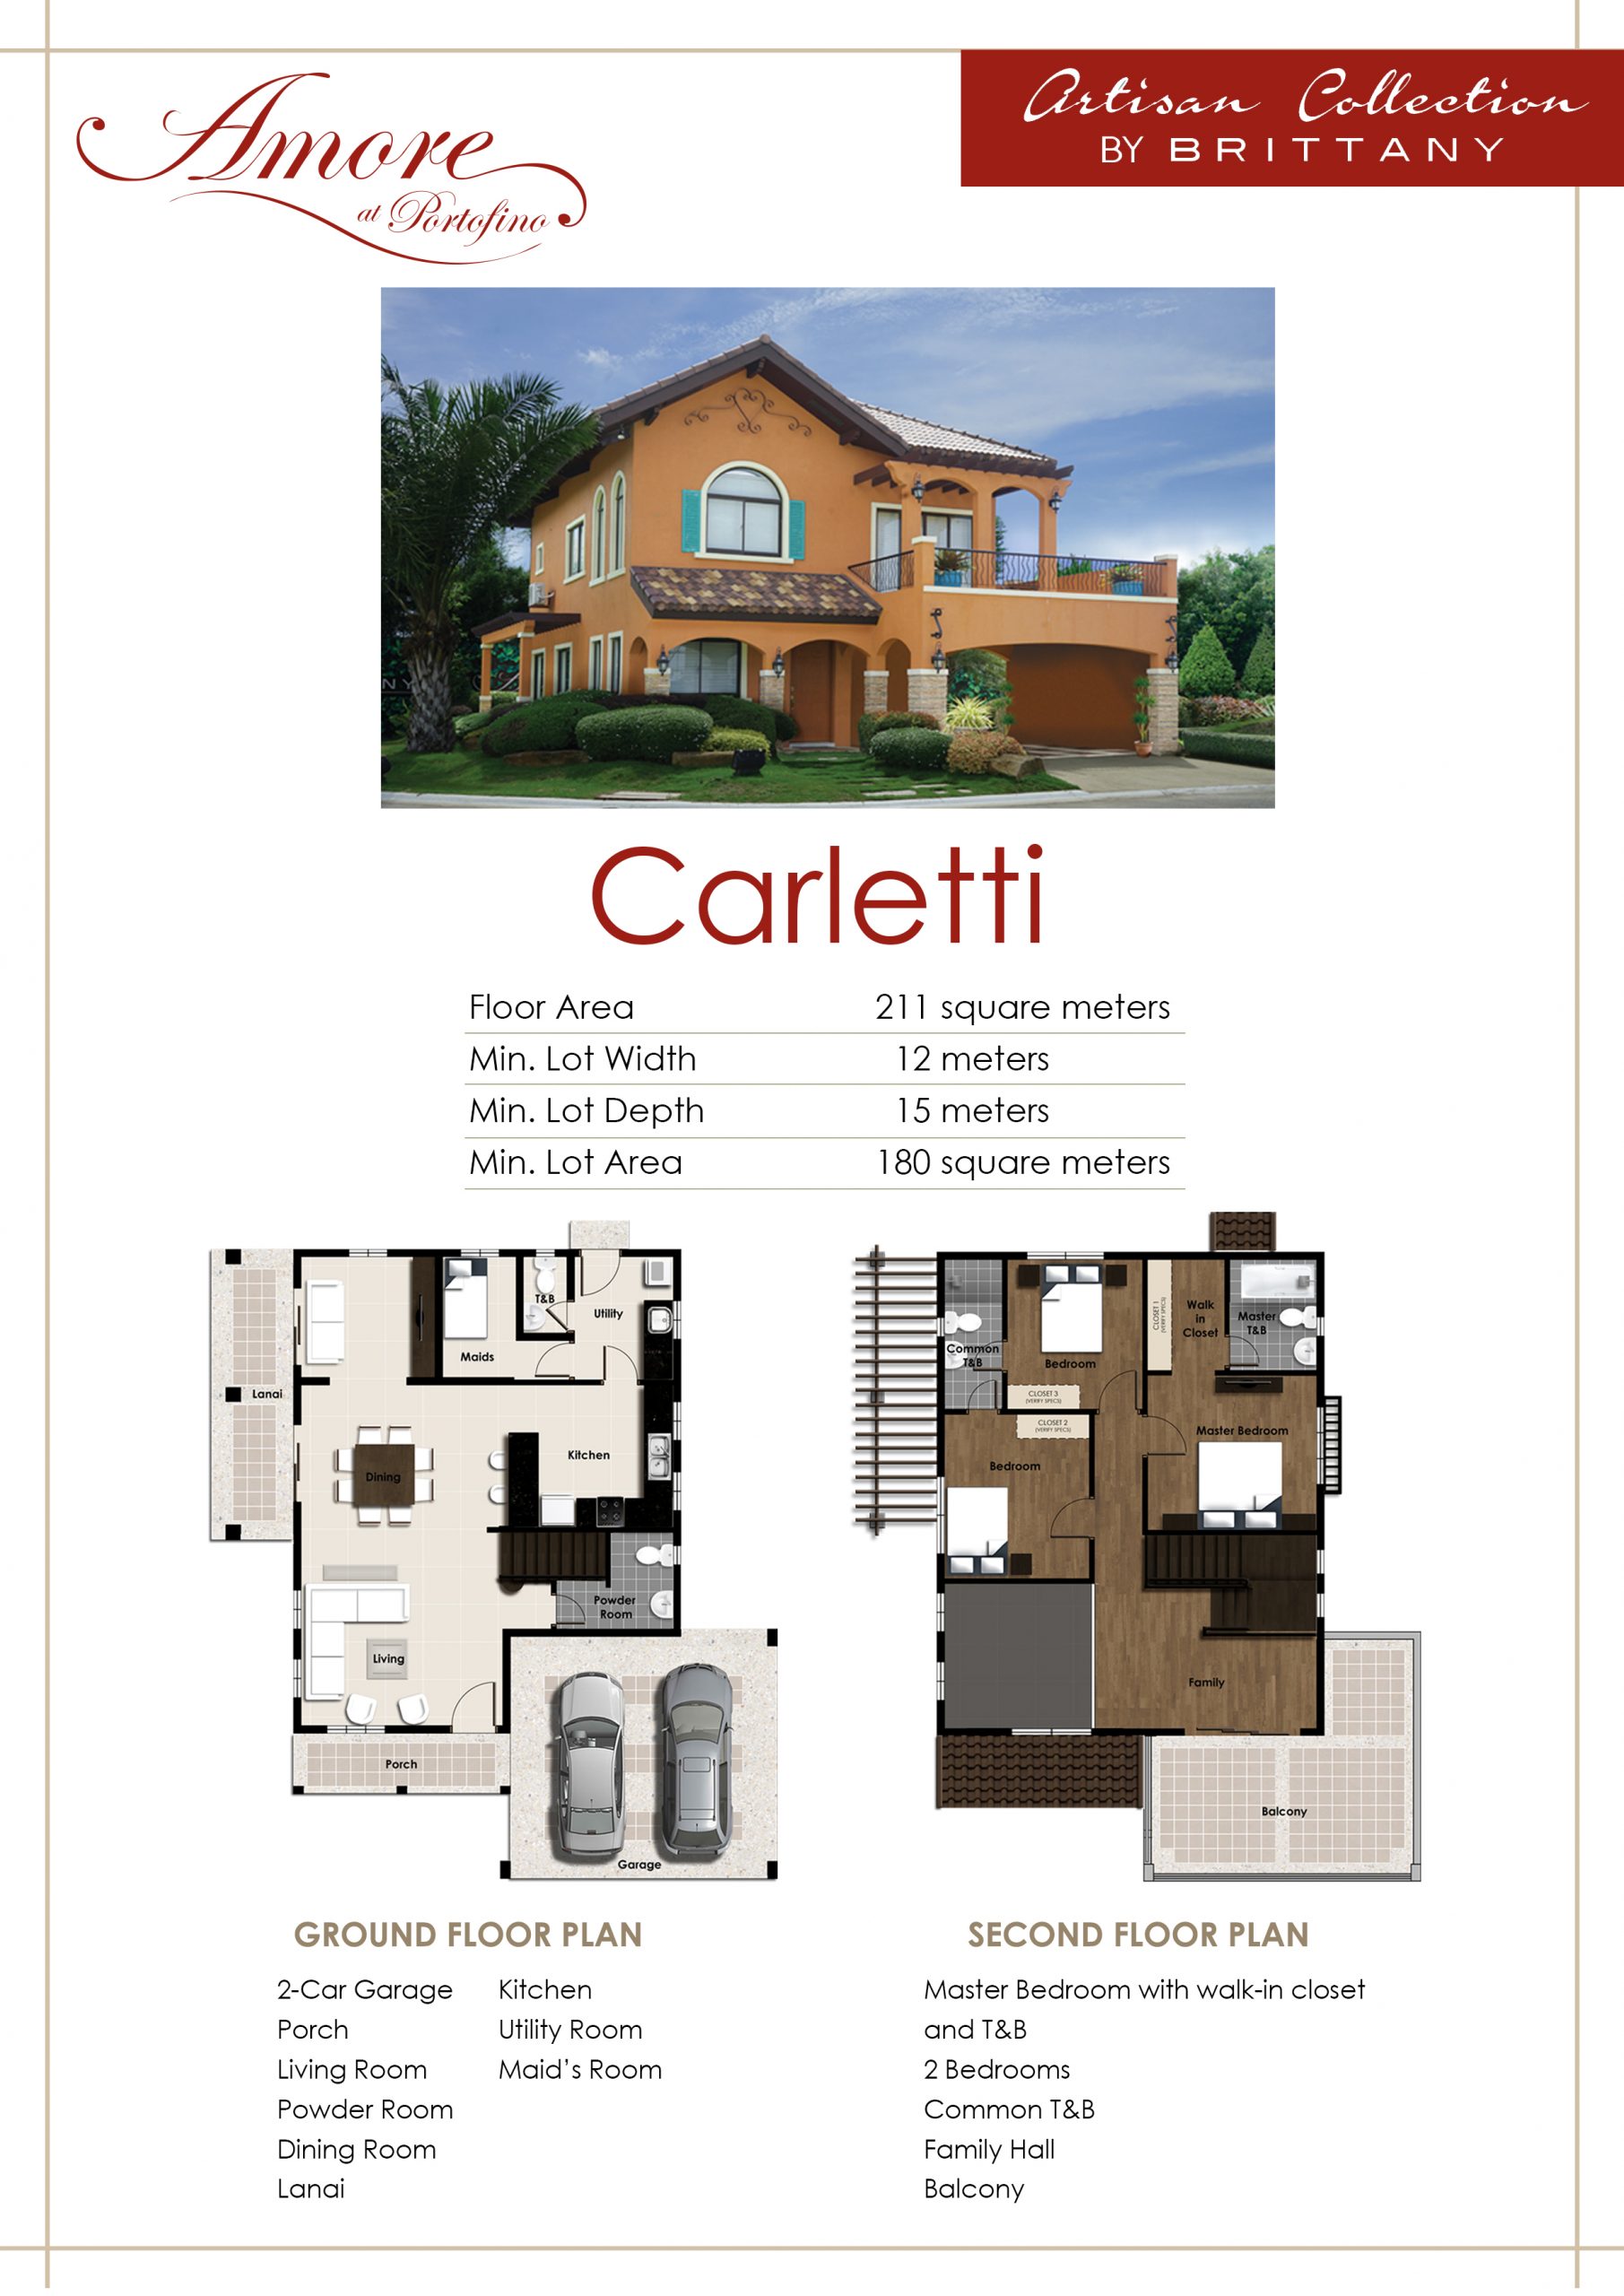 Carletti floor plan